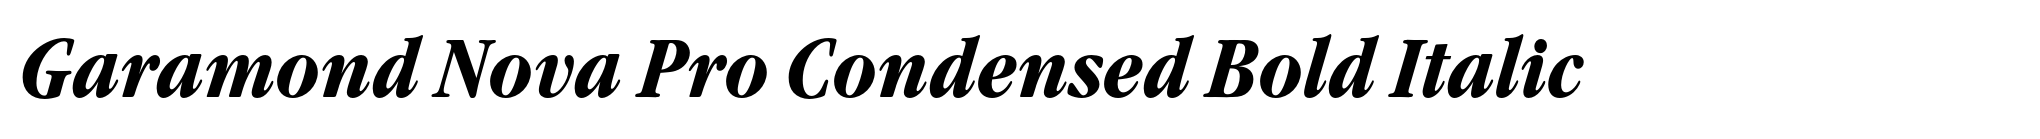 Garamond Nova Pro Condensed Bold Italic image